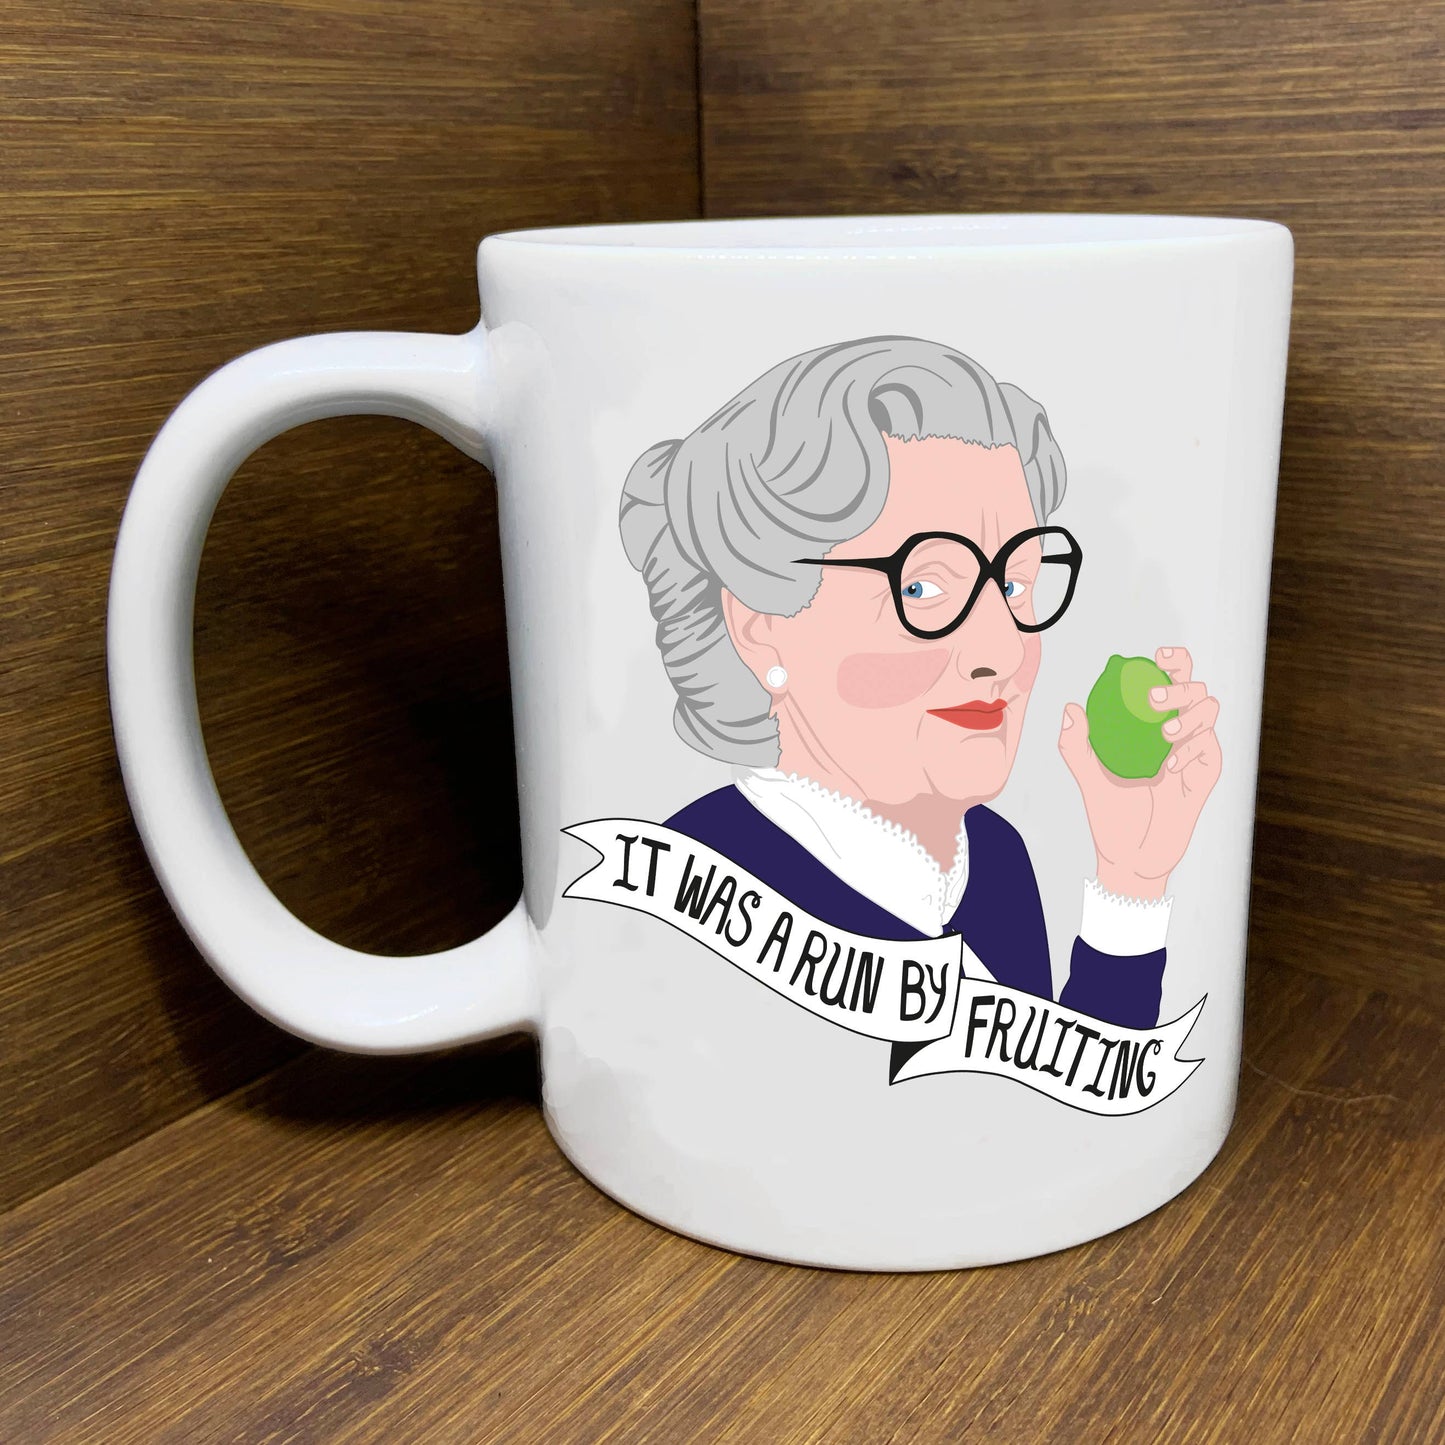 Citizen Ruth - Mrs. Doubtfire Run By Fruiting Mug